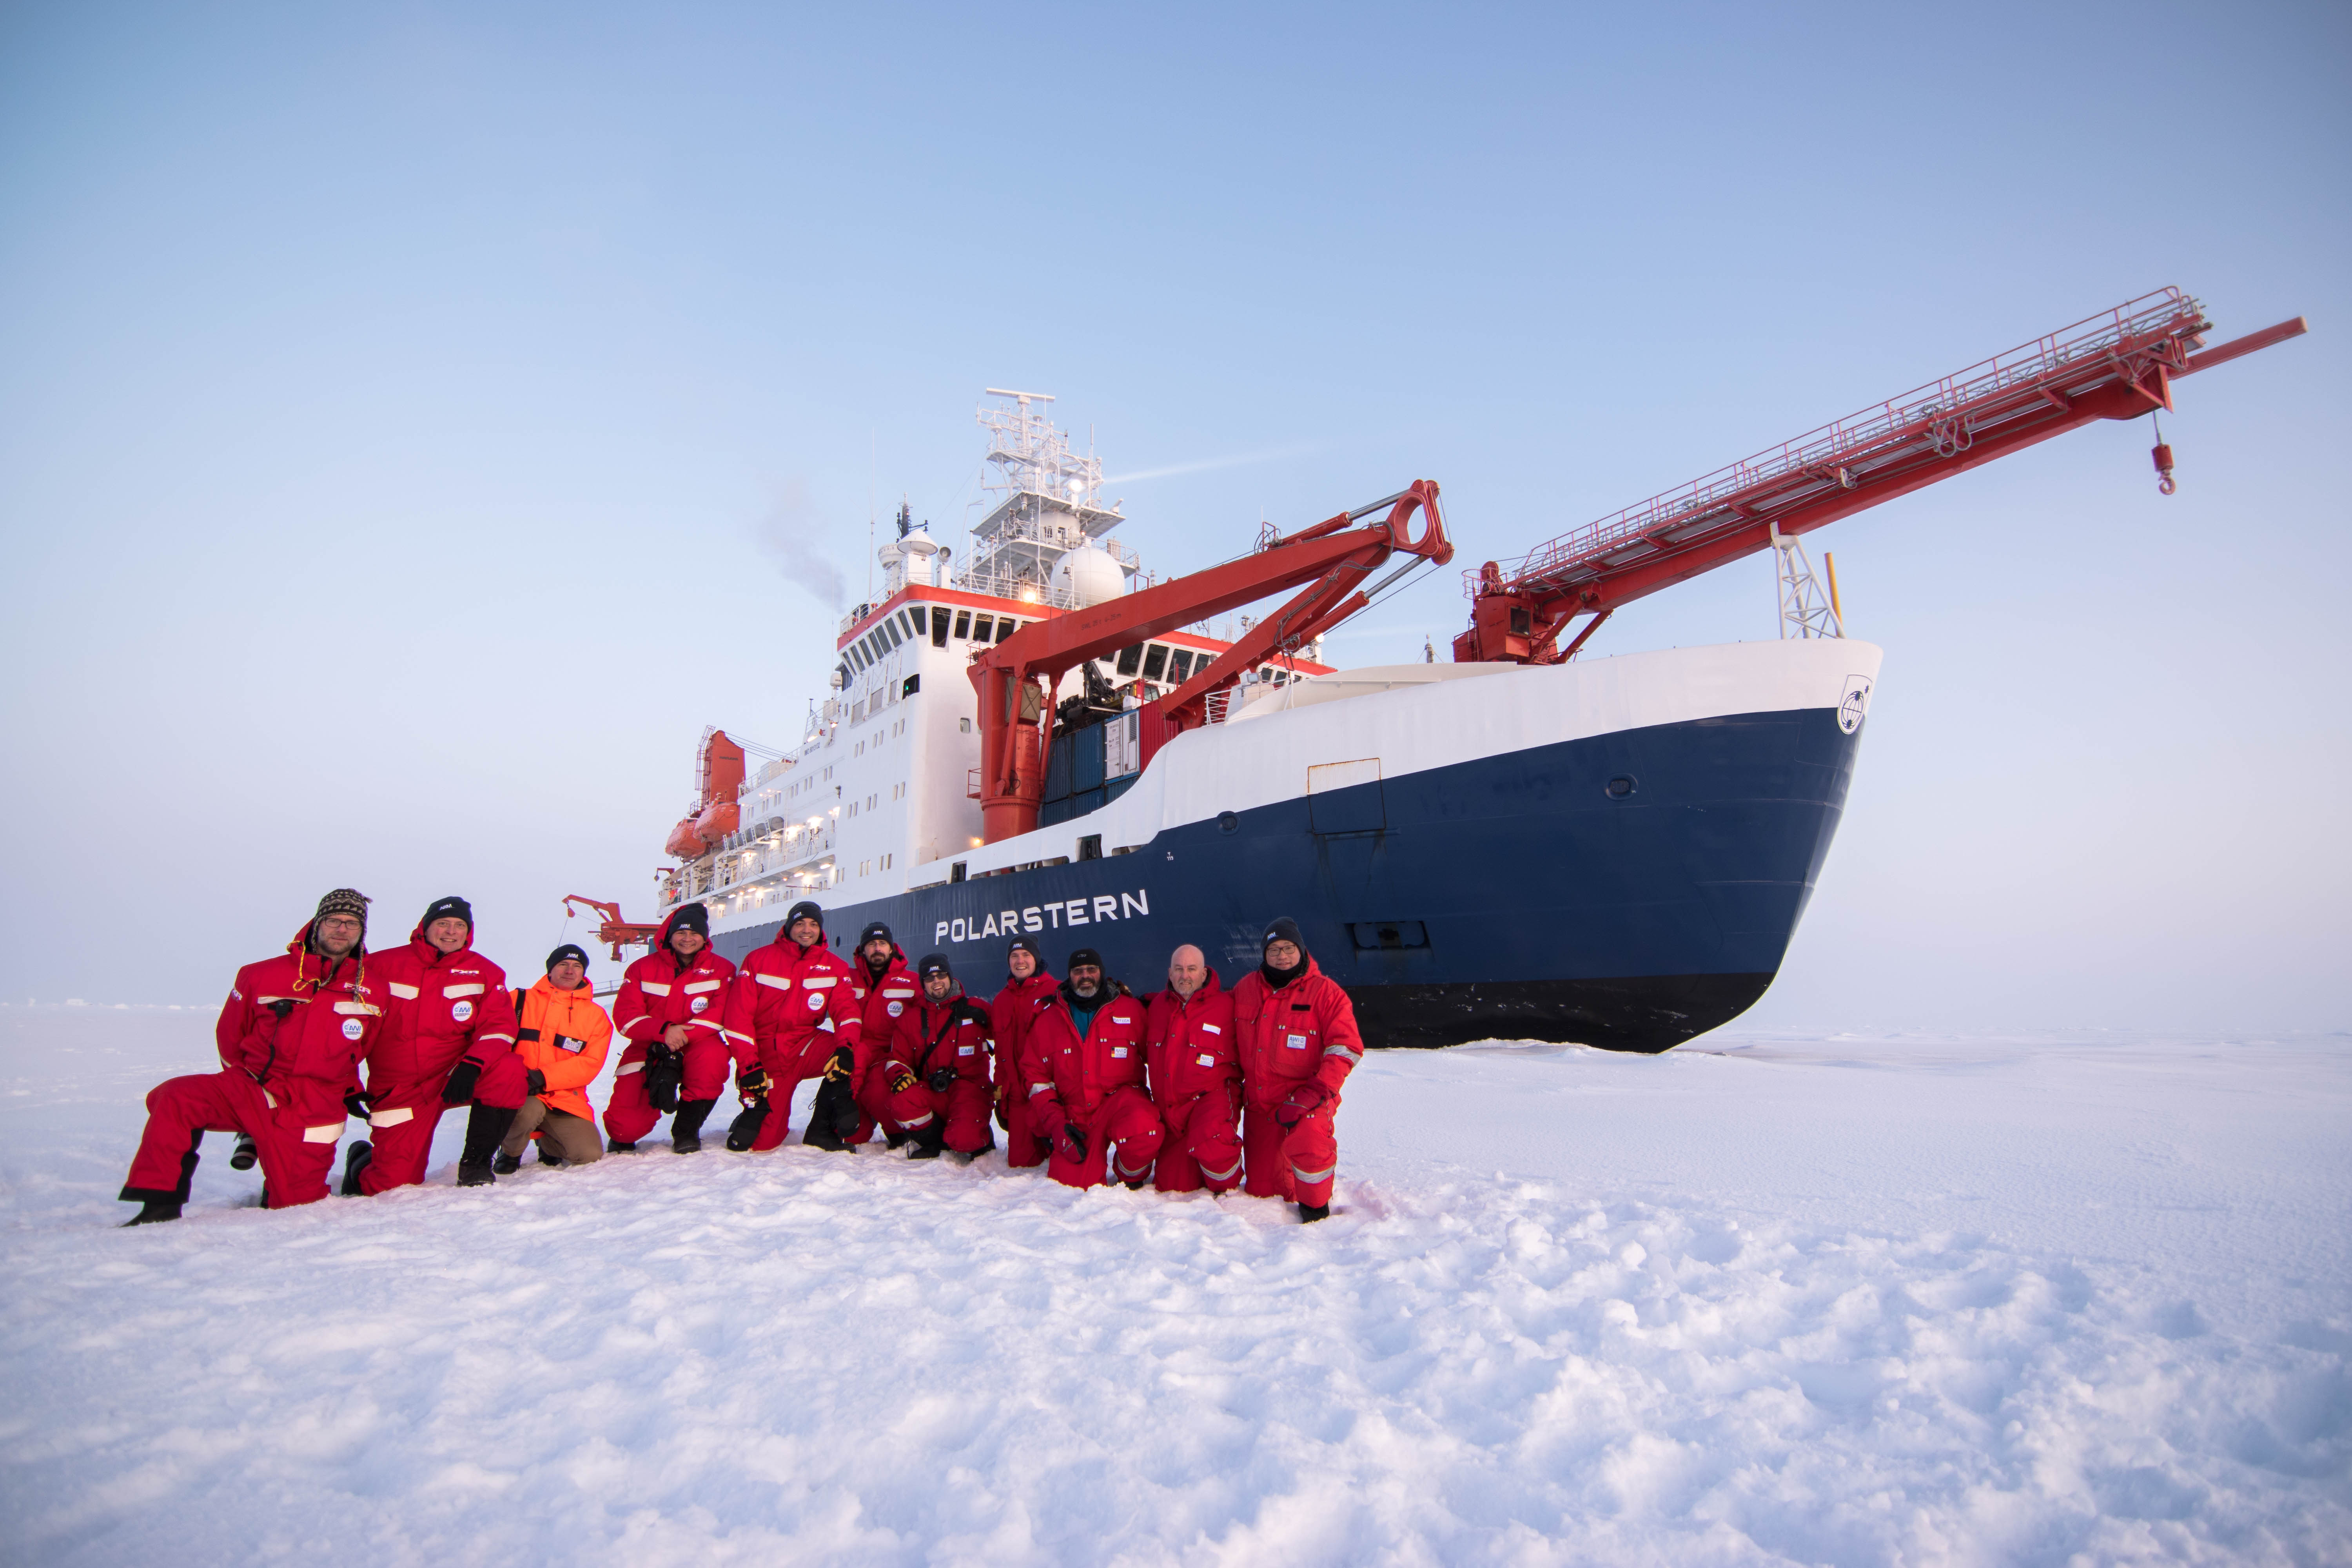 MOSAiC installation team members kneel in snow in front of the icebreaker R/V Polarstern